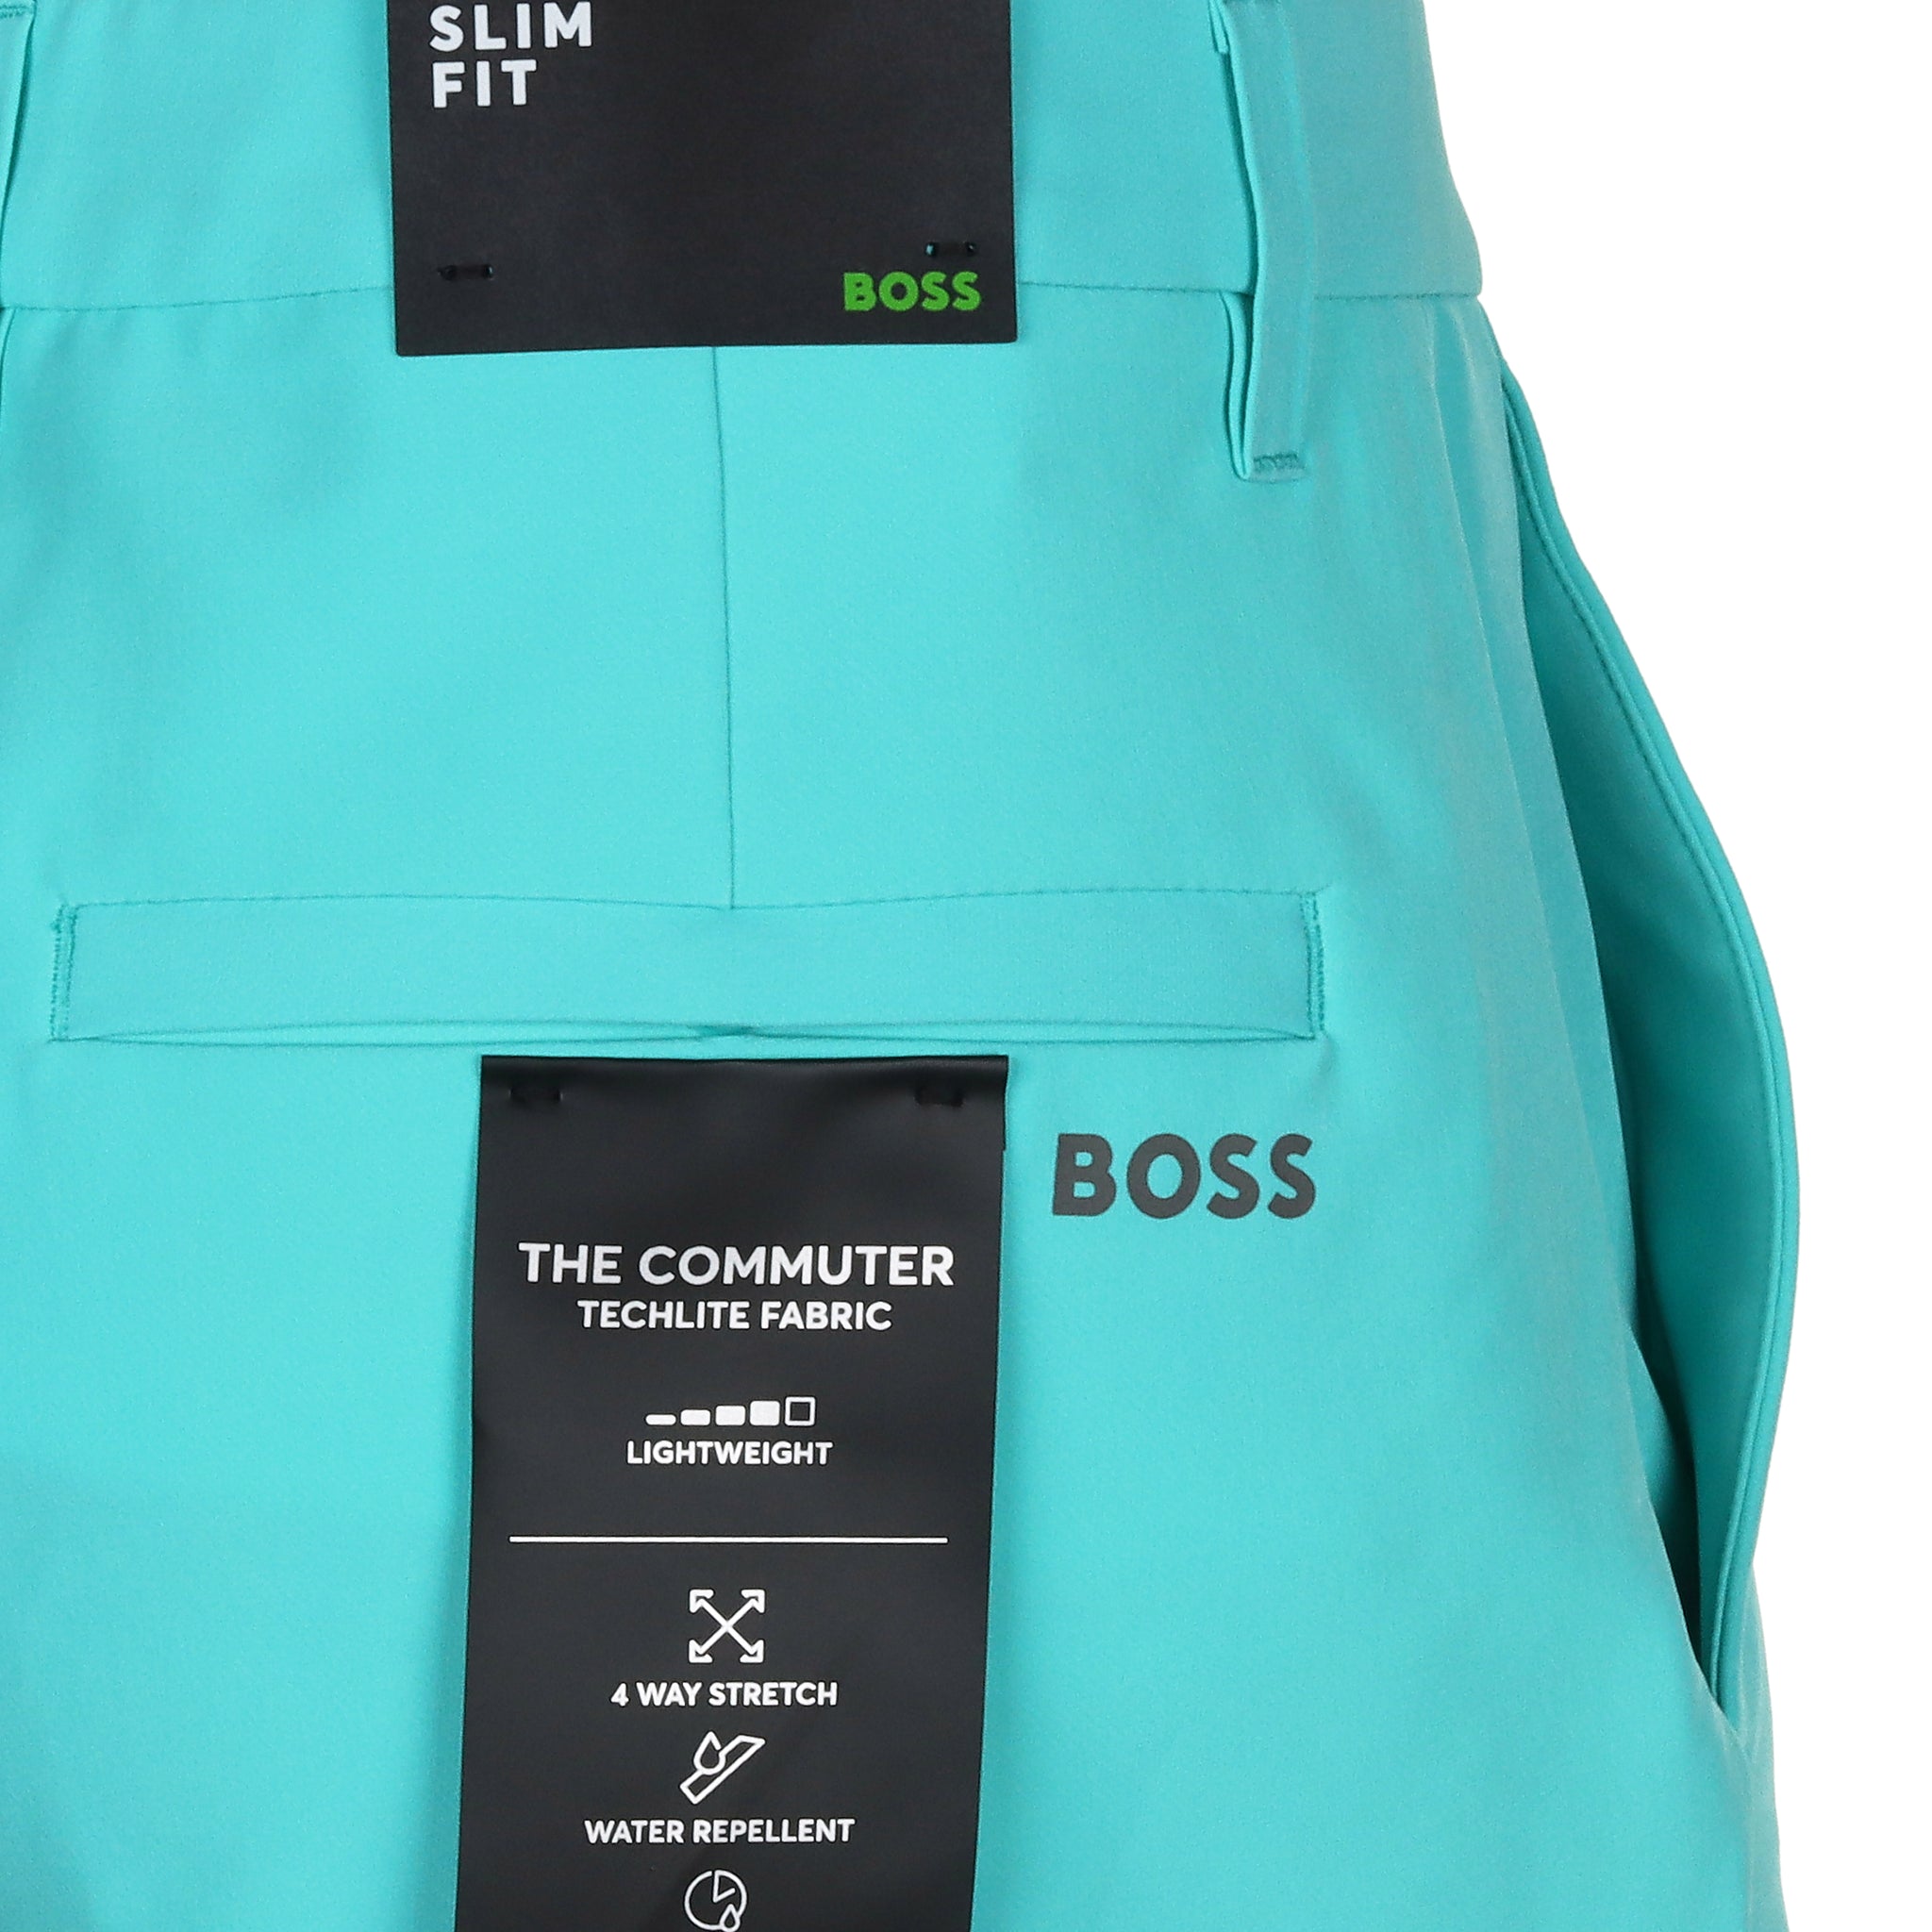 boss-s_commuter-slim-golf-shorts-50504392-turquoise-367